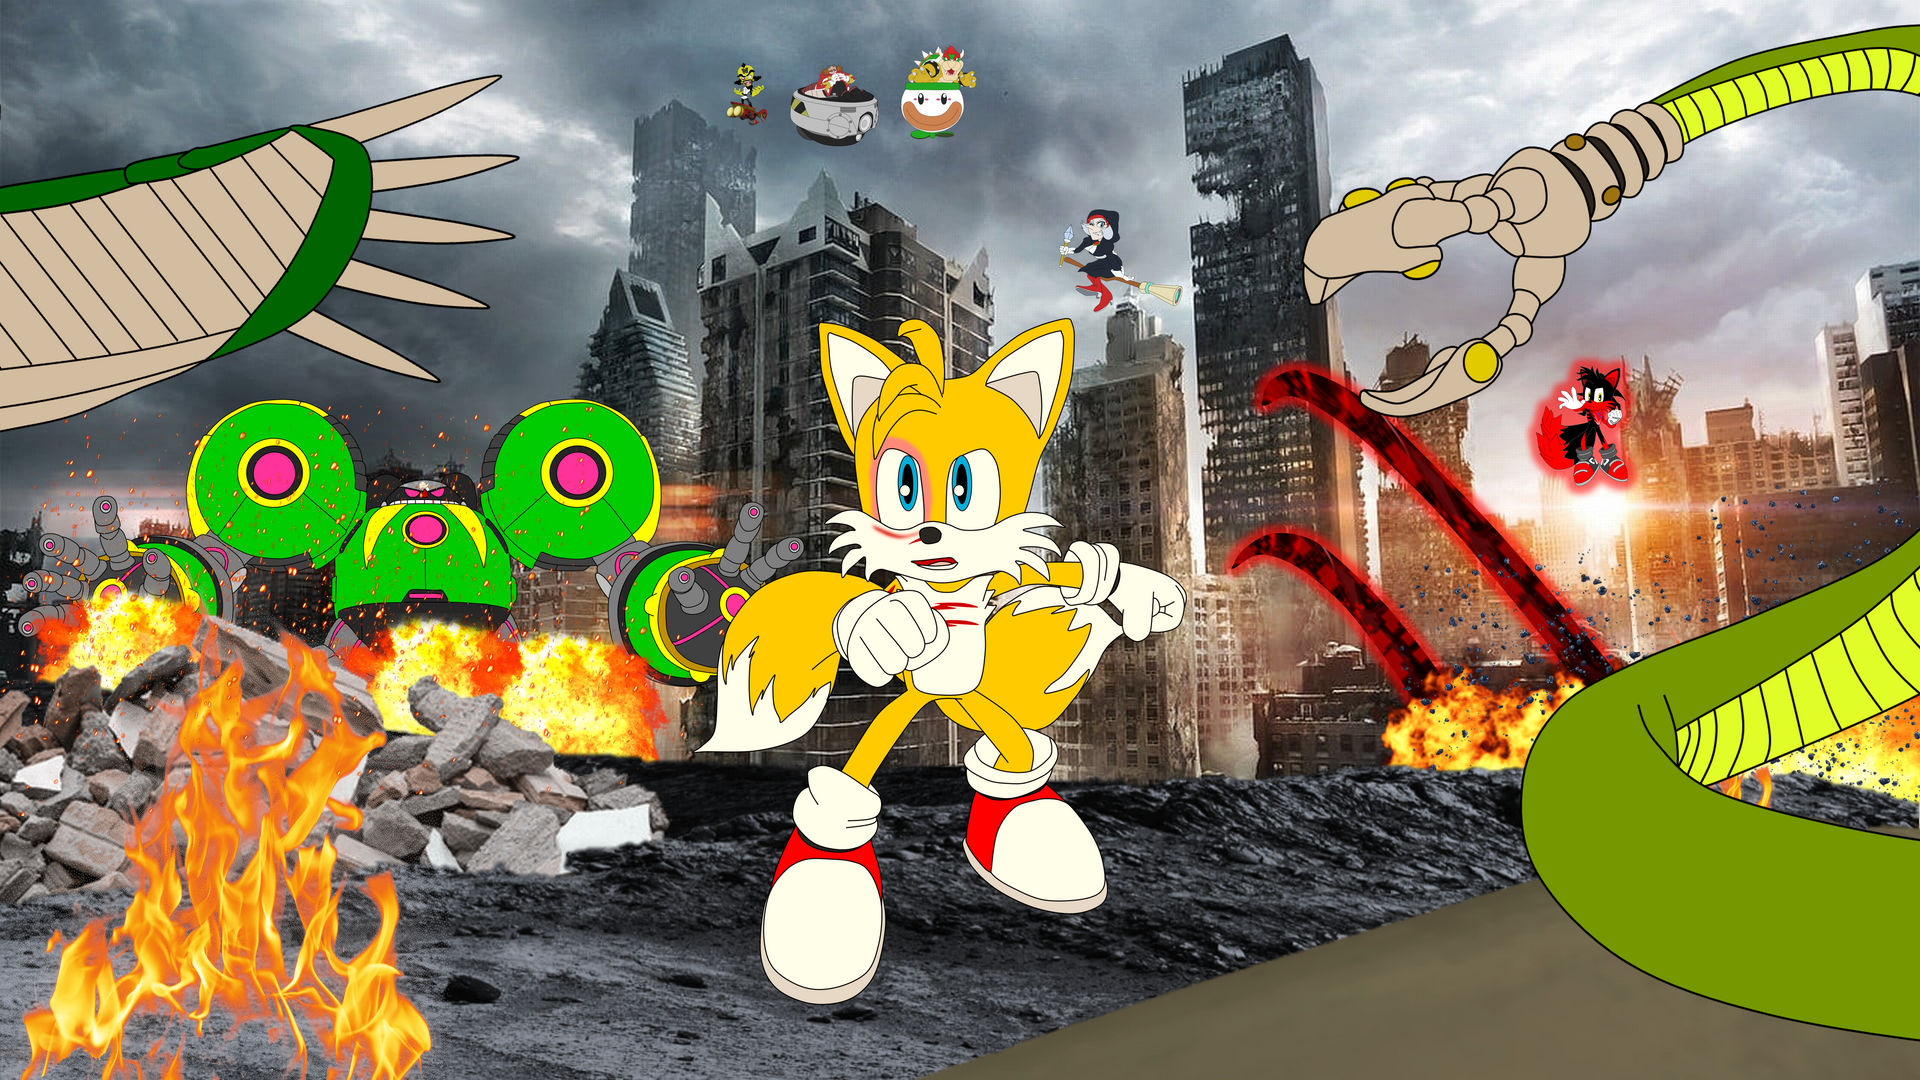 Sonic prime season 3 by nikoriko22 on DeviantArt